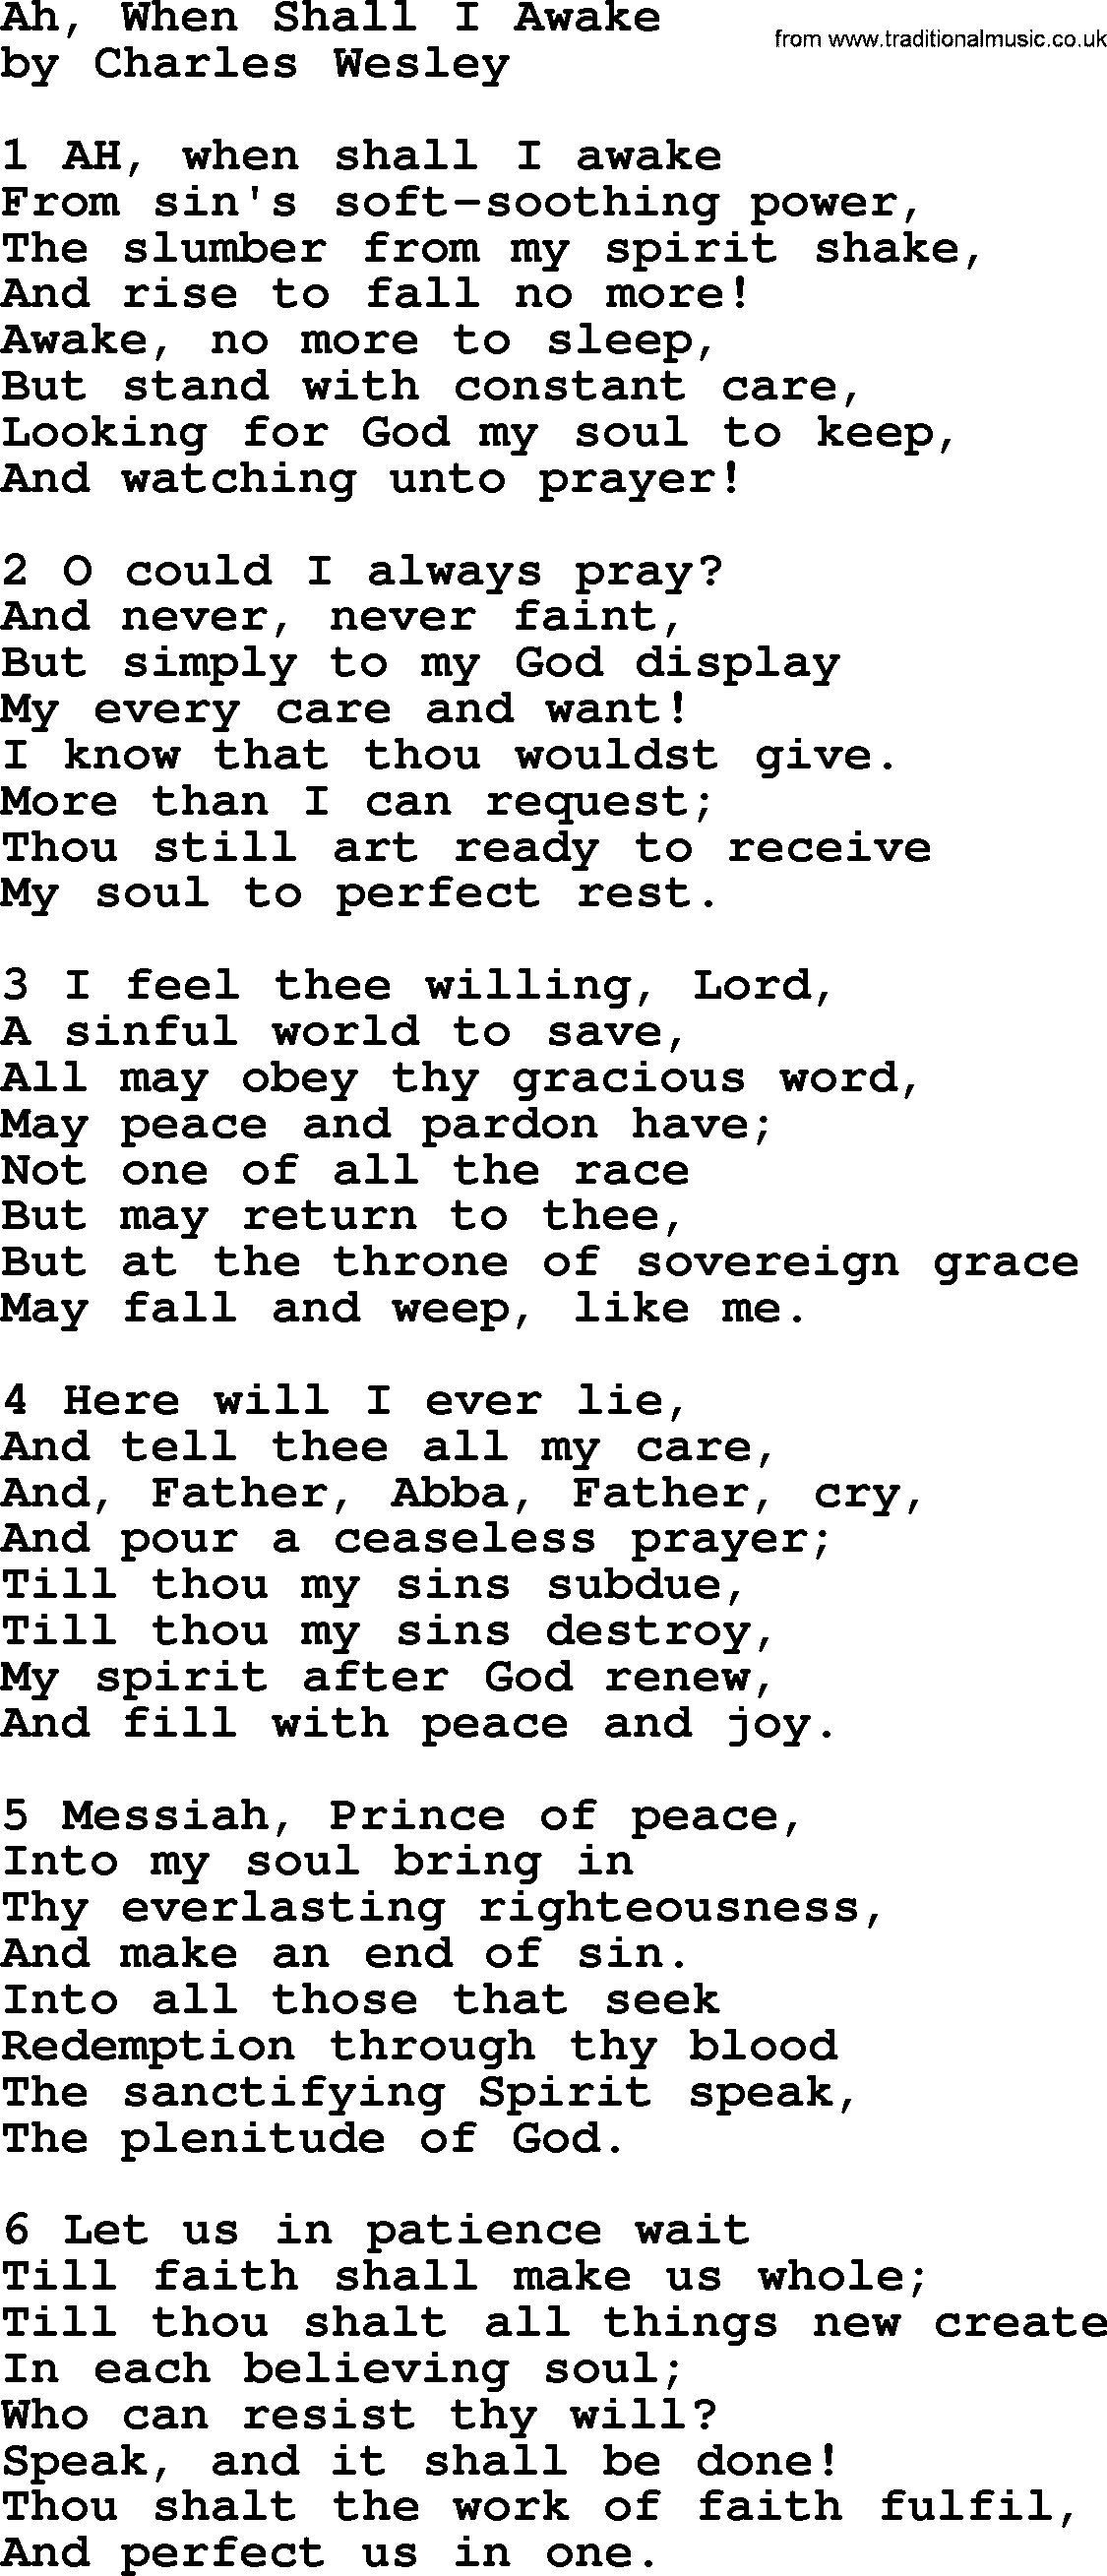 Charles Wesley hymn: Ah, When Shall I Awake, lyrics